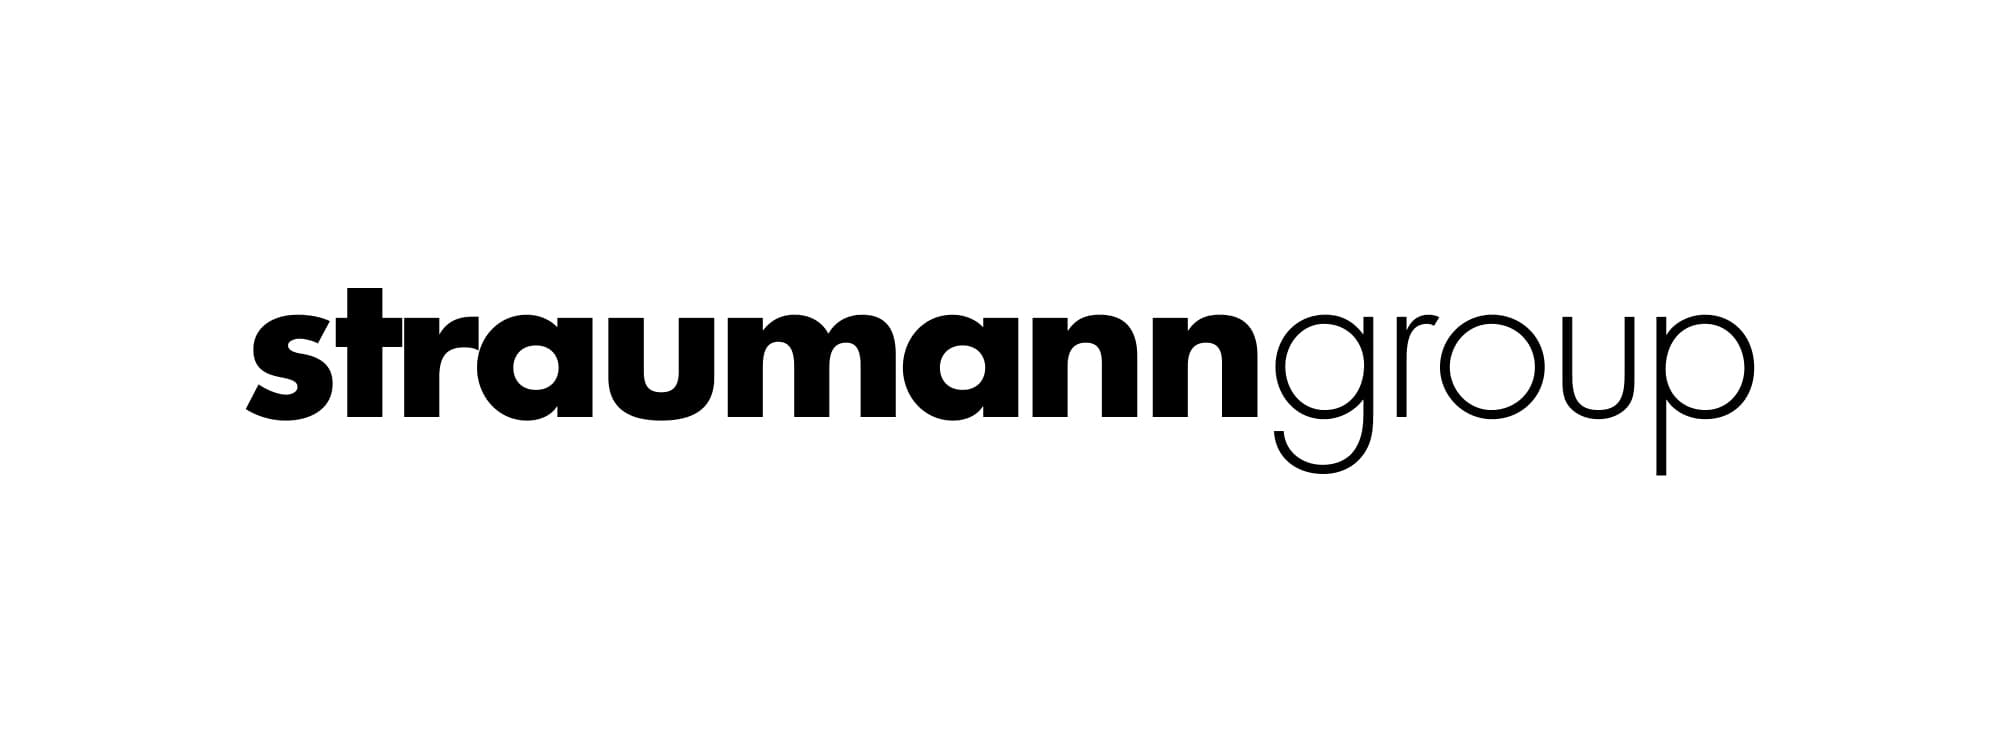 straumanngroup-logo-rgb-black.jpeg?1f660e037e36f6ca600a359eb173440f